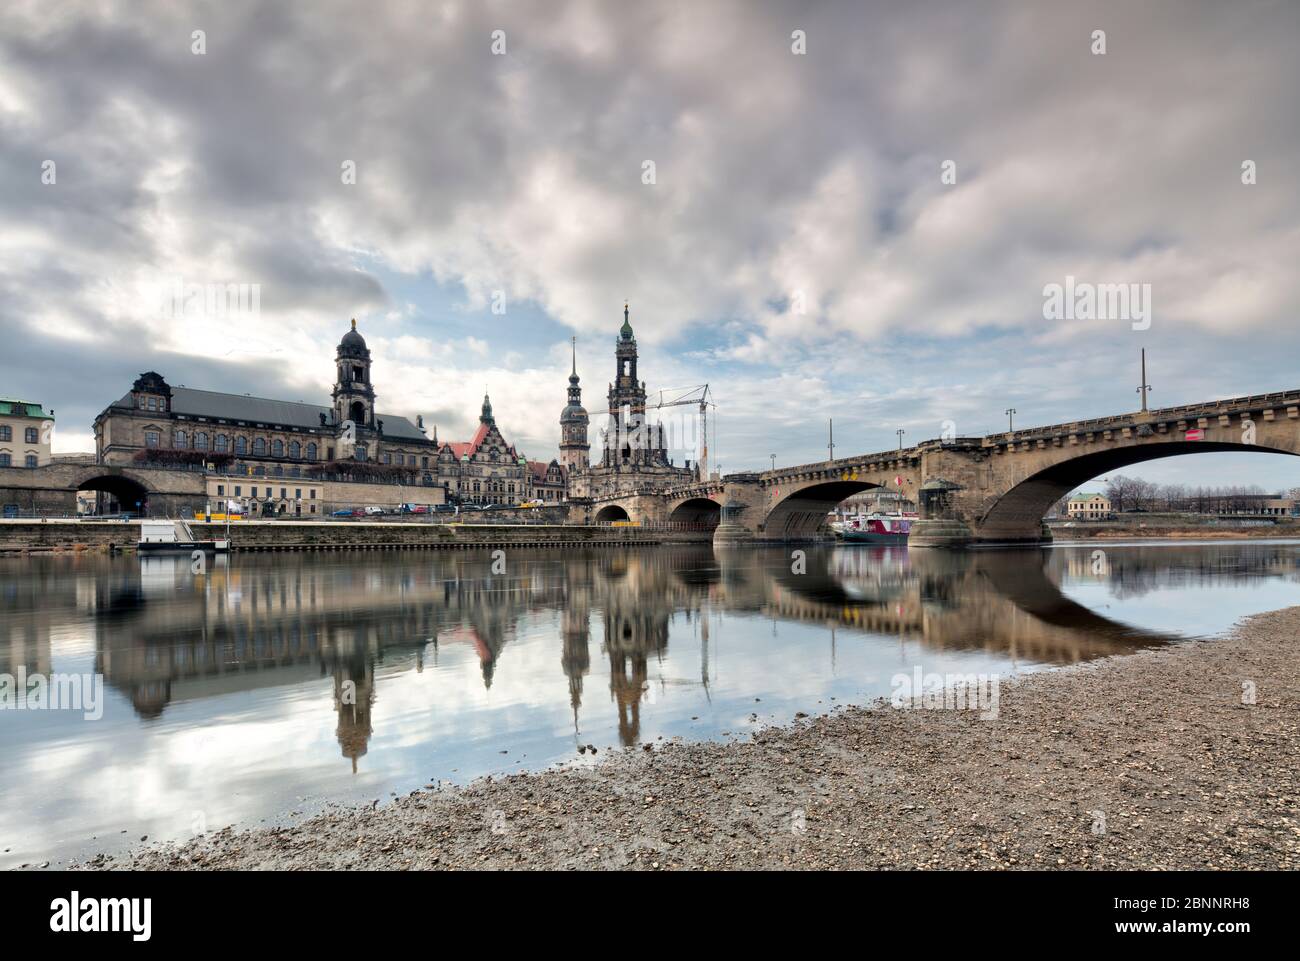 Elbpanorama, Brühlsche Terrasse, Zwinger, Hofkirche, Augustus Bridge, Dresden, Saxony, Germany, Europe, Stock Photo